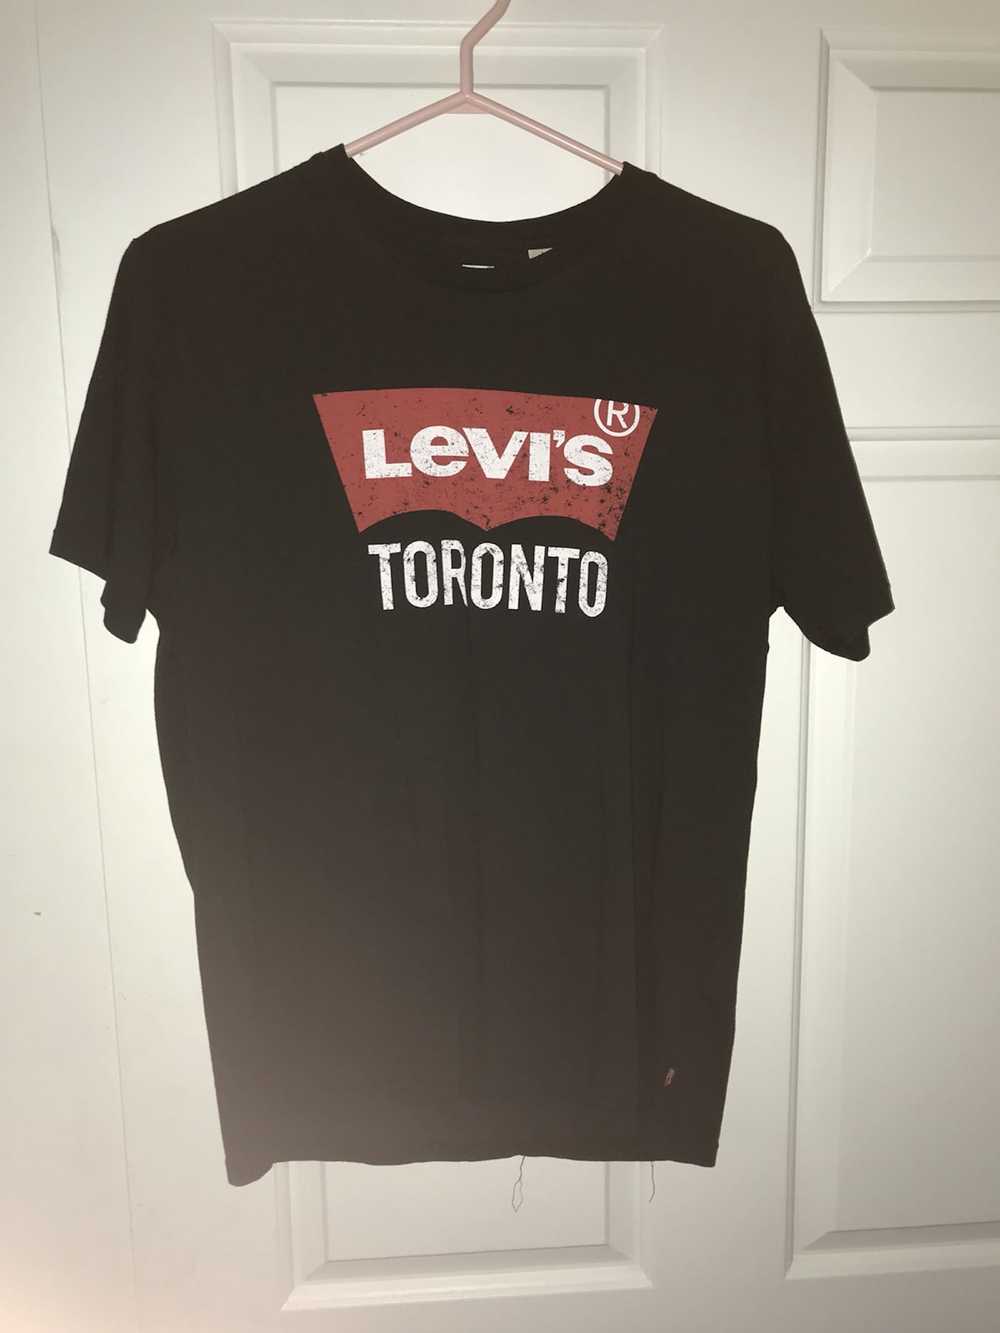 Levi's Levi’s Toronto Callab - image 1